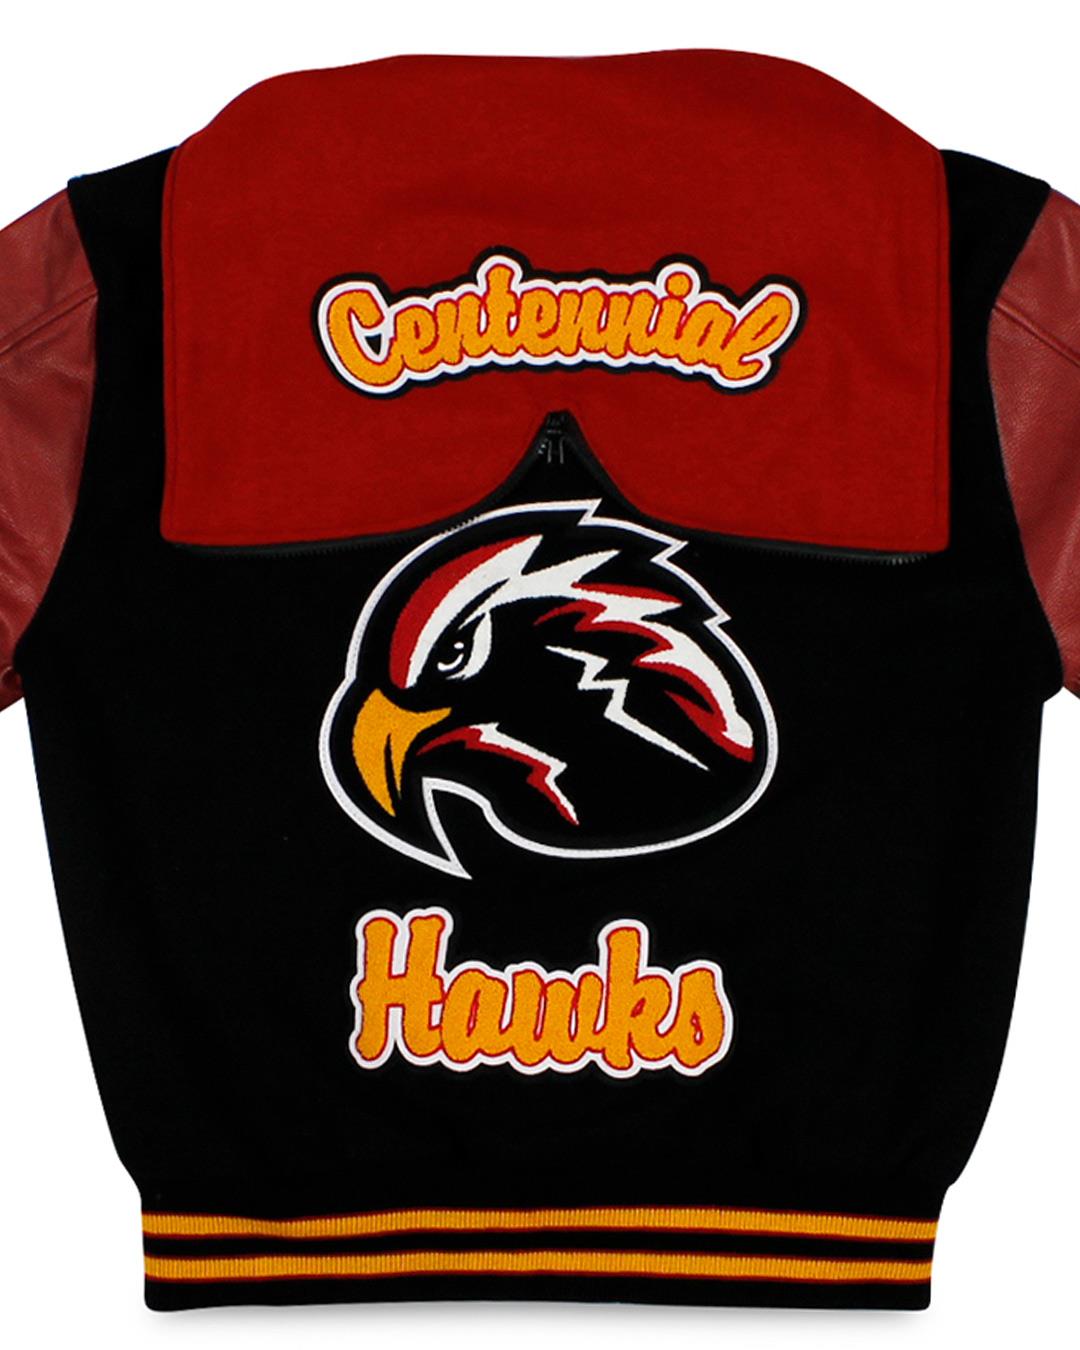 Centennial High School Letterman Jacket, Las Cruces NM - Back